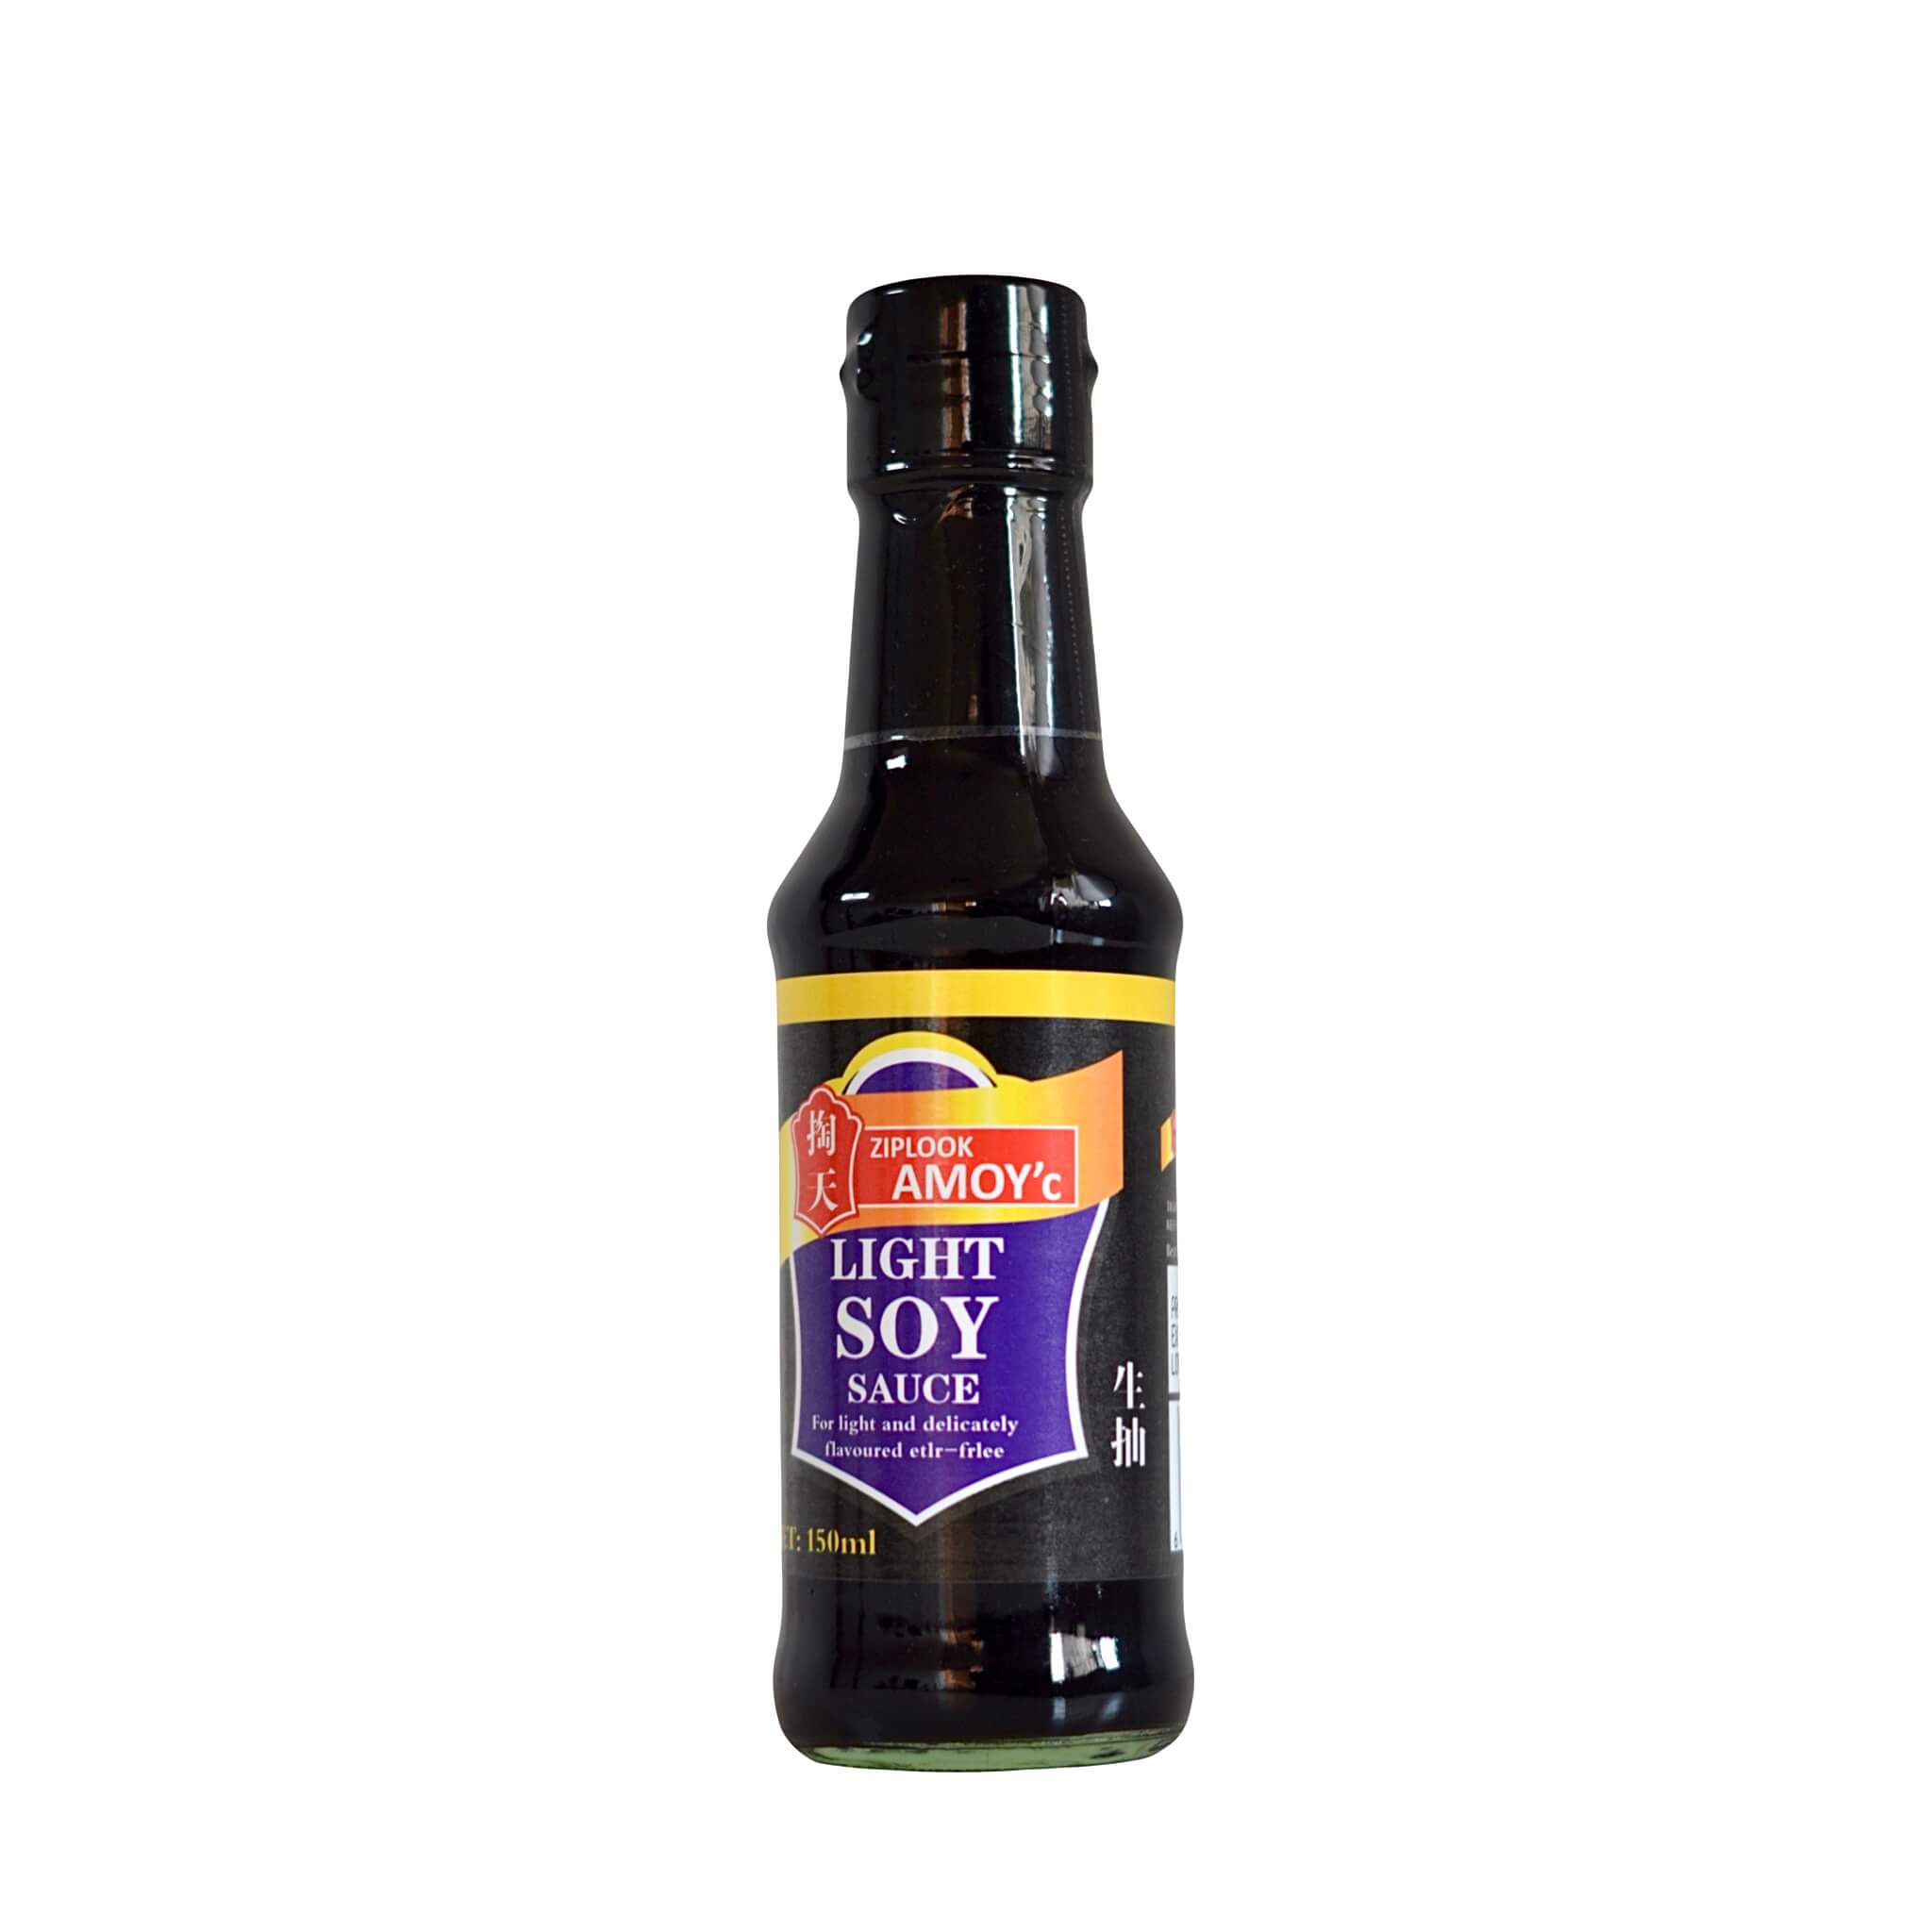 a bottle of light soy sauce